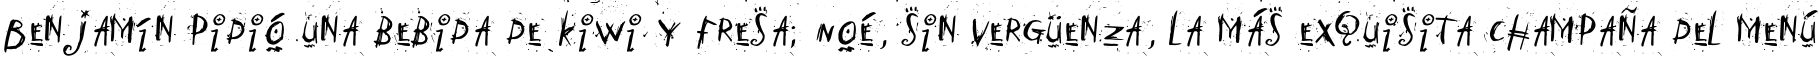 Пример написания шрифтом CatScratch текста на испанском